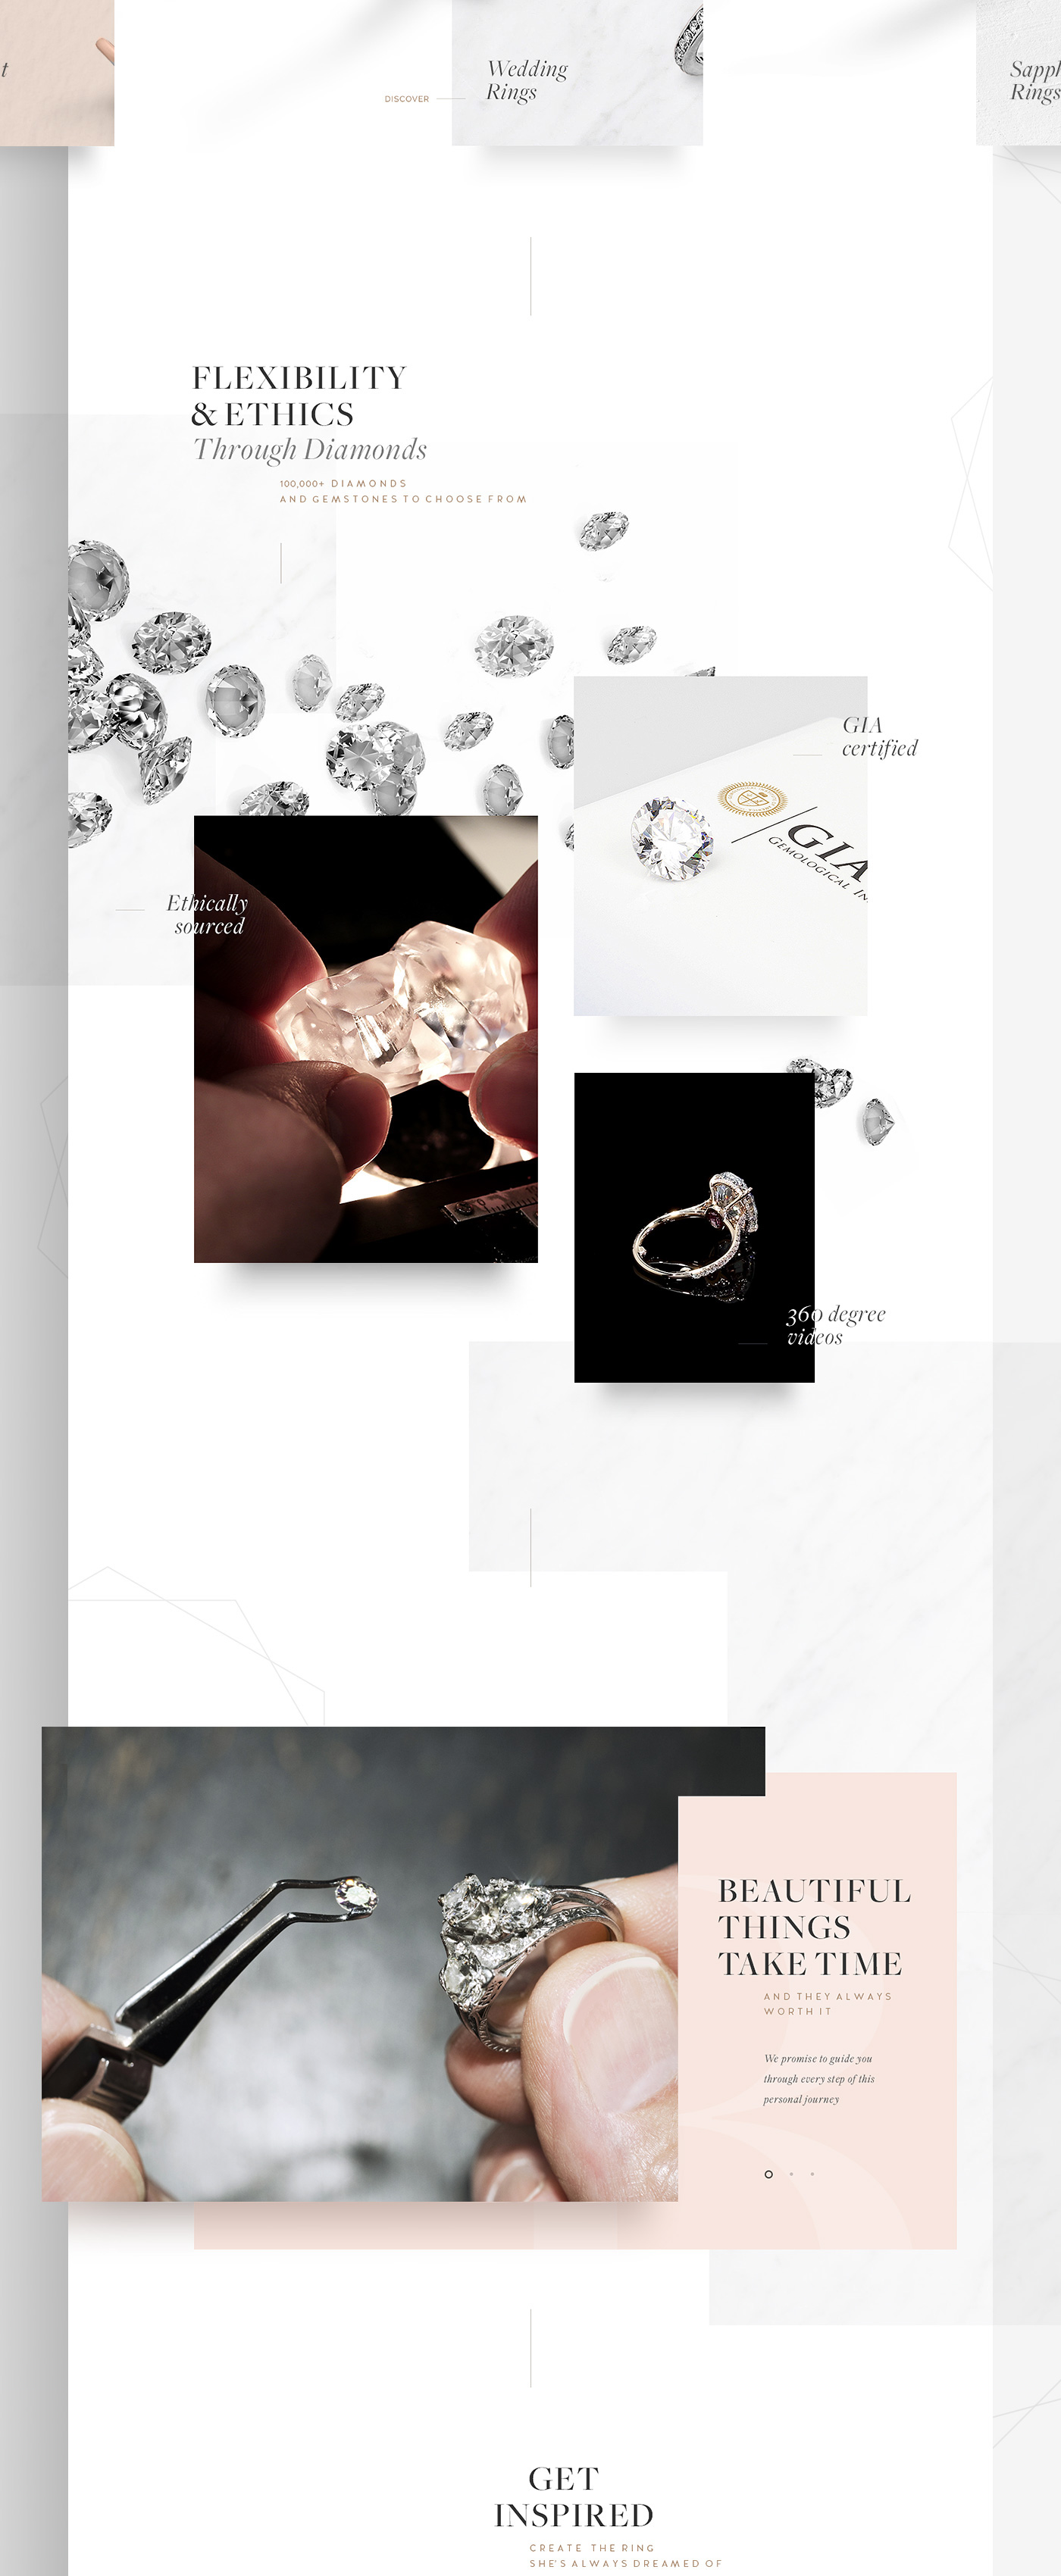 engagement rings luxury jewelry diamonds bespoke rings wedding bridal parallax